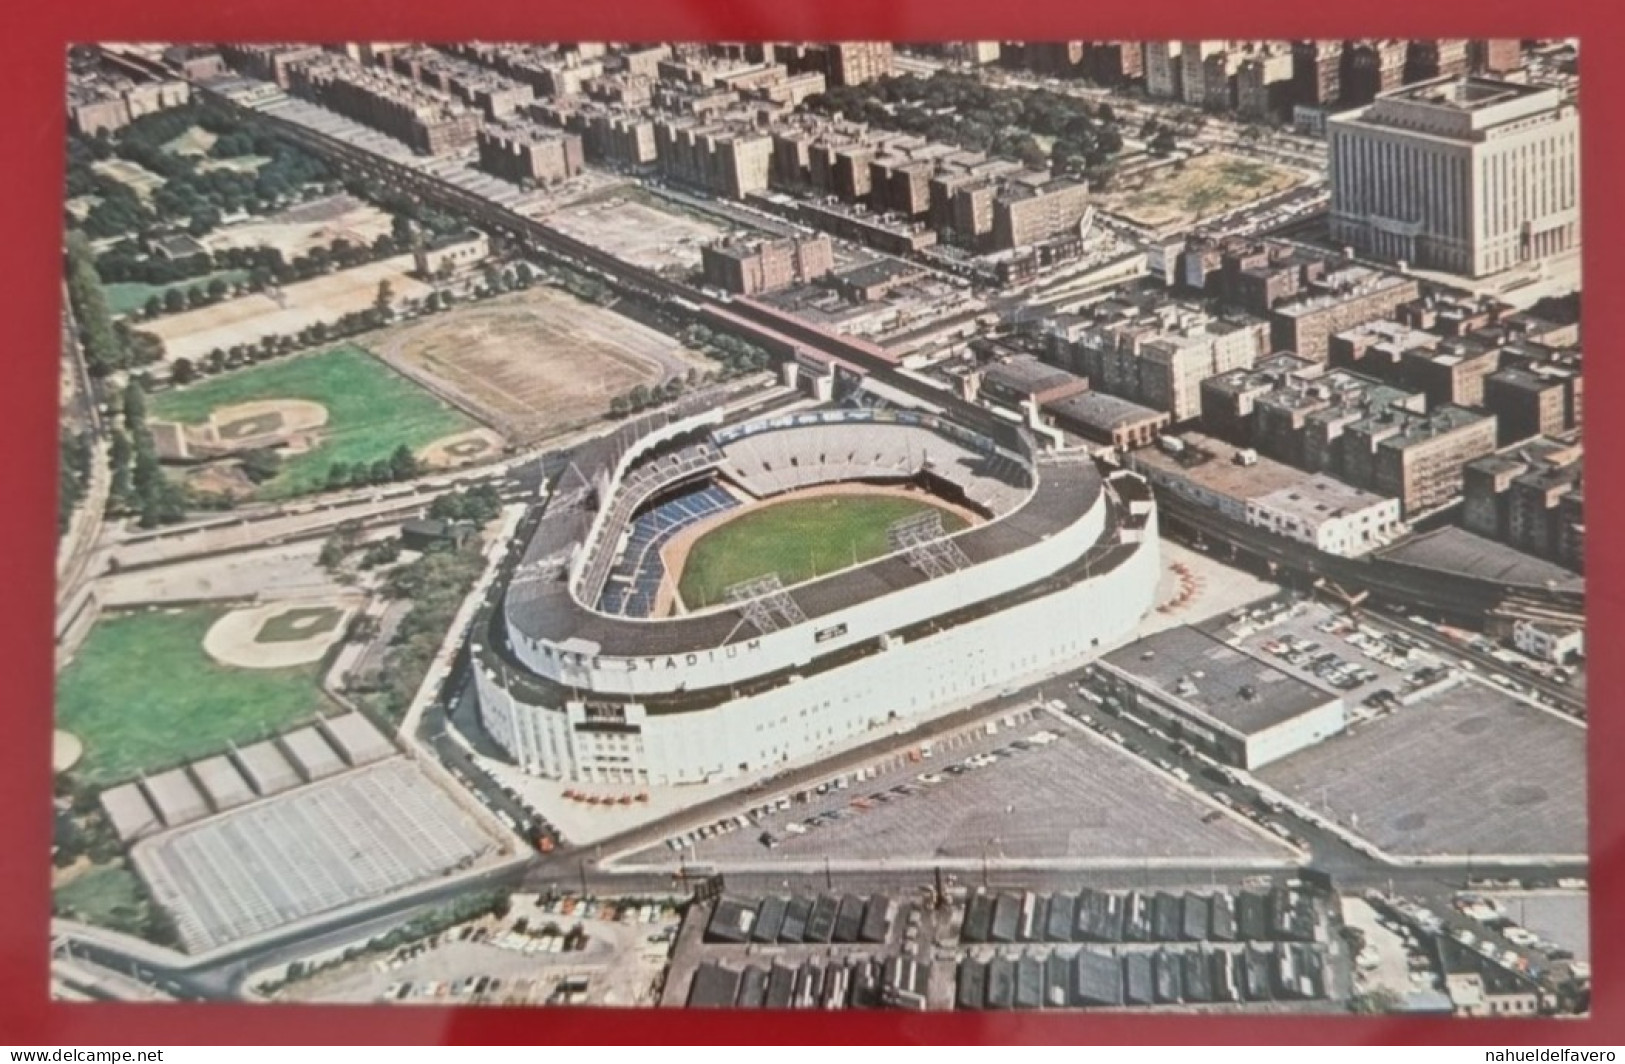 Uncirculated Postcard - USA - NY, NEW YORK CITY - AIR VIEW OF YANKEE STADIUM - Stadien & Sportanlagen